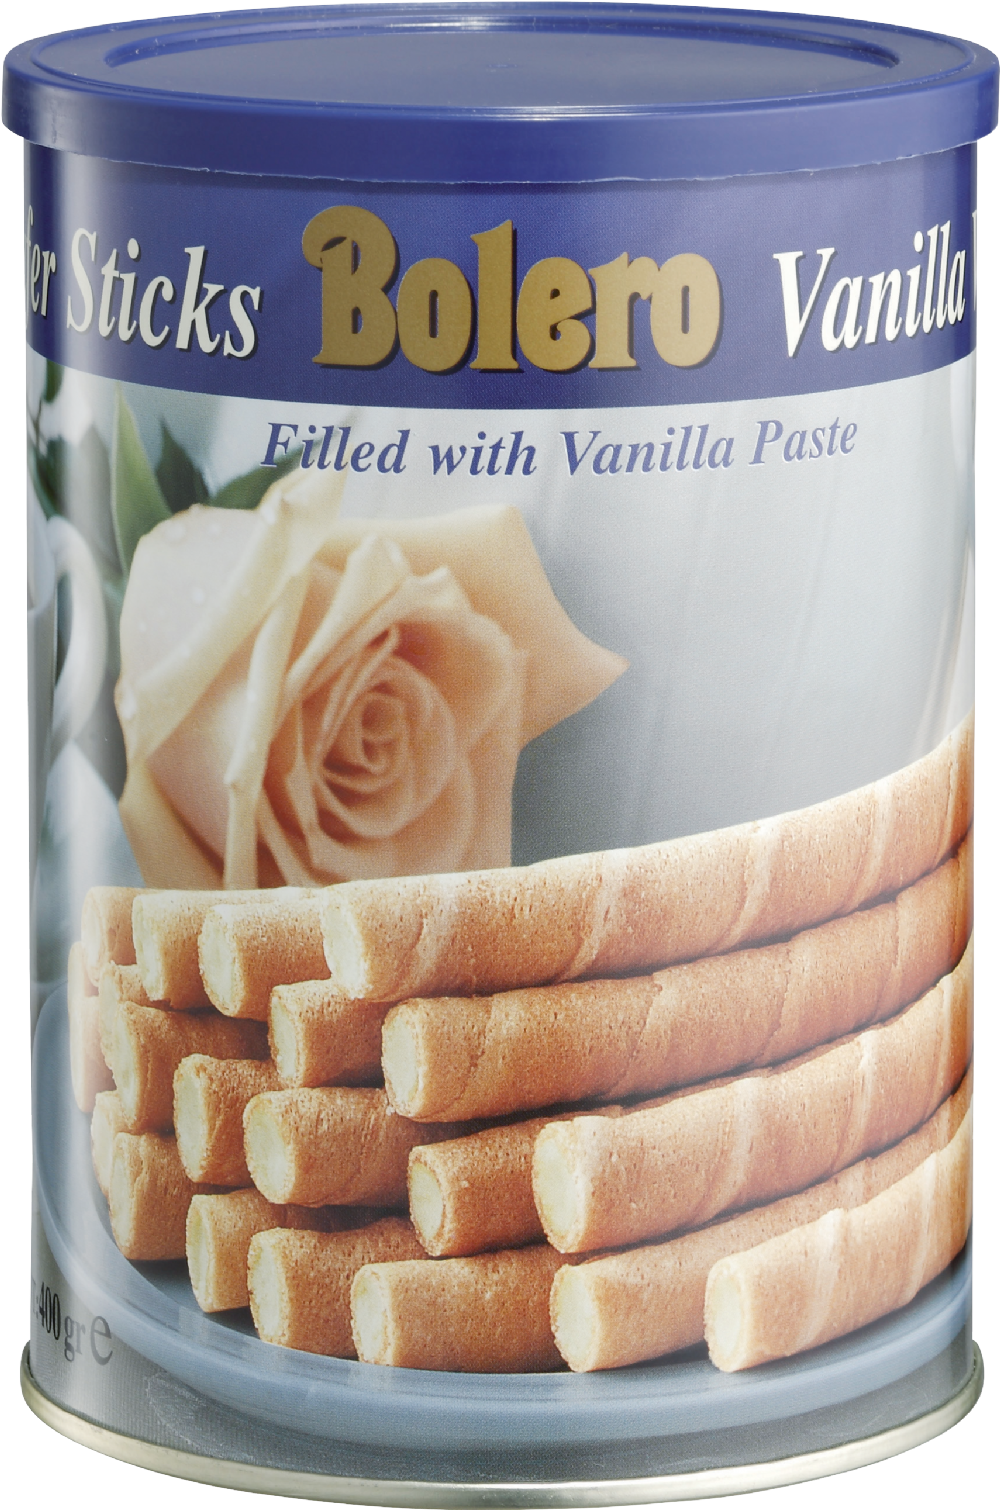 BOLERO Vanilla Wafer Sticks 400g